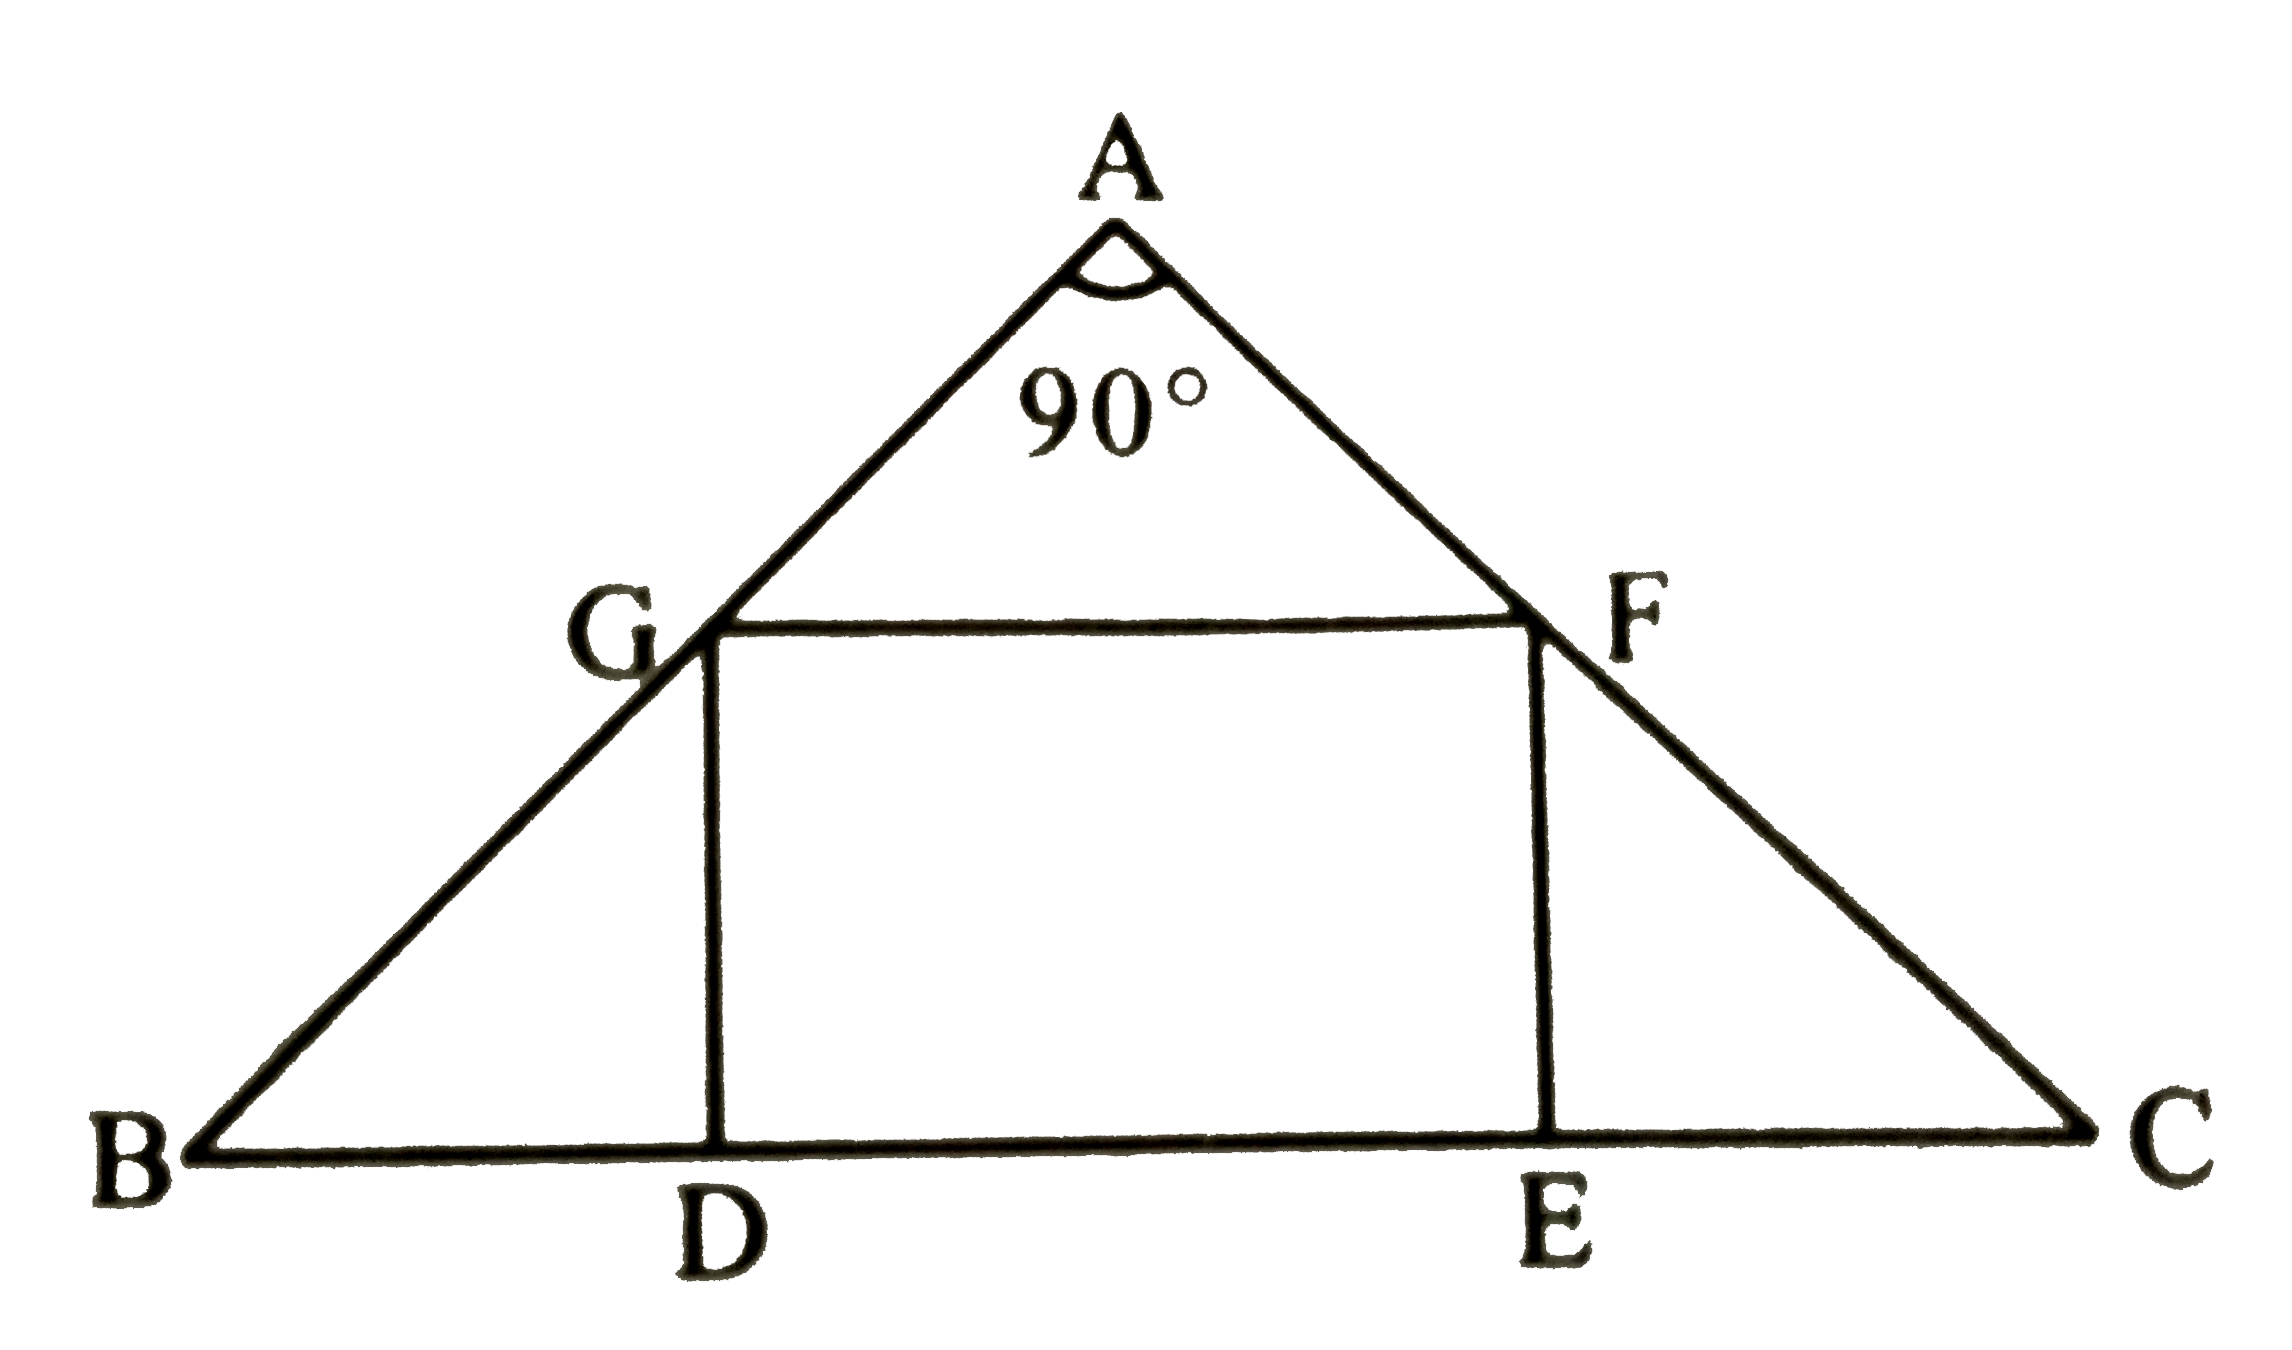 दी गई आकृति में, एक वर्ग DEFG है तथा angle BAC = 90^(@) है तो सिद्ध कीजिए कि    (i) triangleAFG ~ triangle DBG   (ii) triangle AGF~ triangle EFC   (iii) triangle DBG~triangleEFC   (iv) (DE)^(2) = BD xx EC